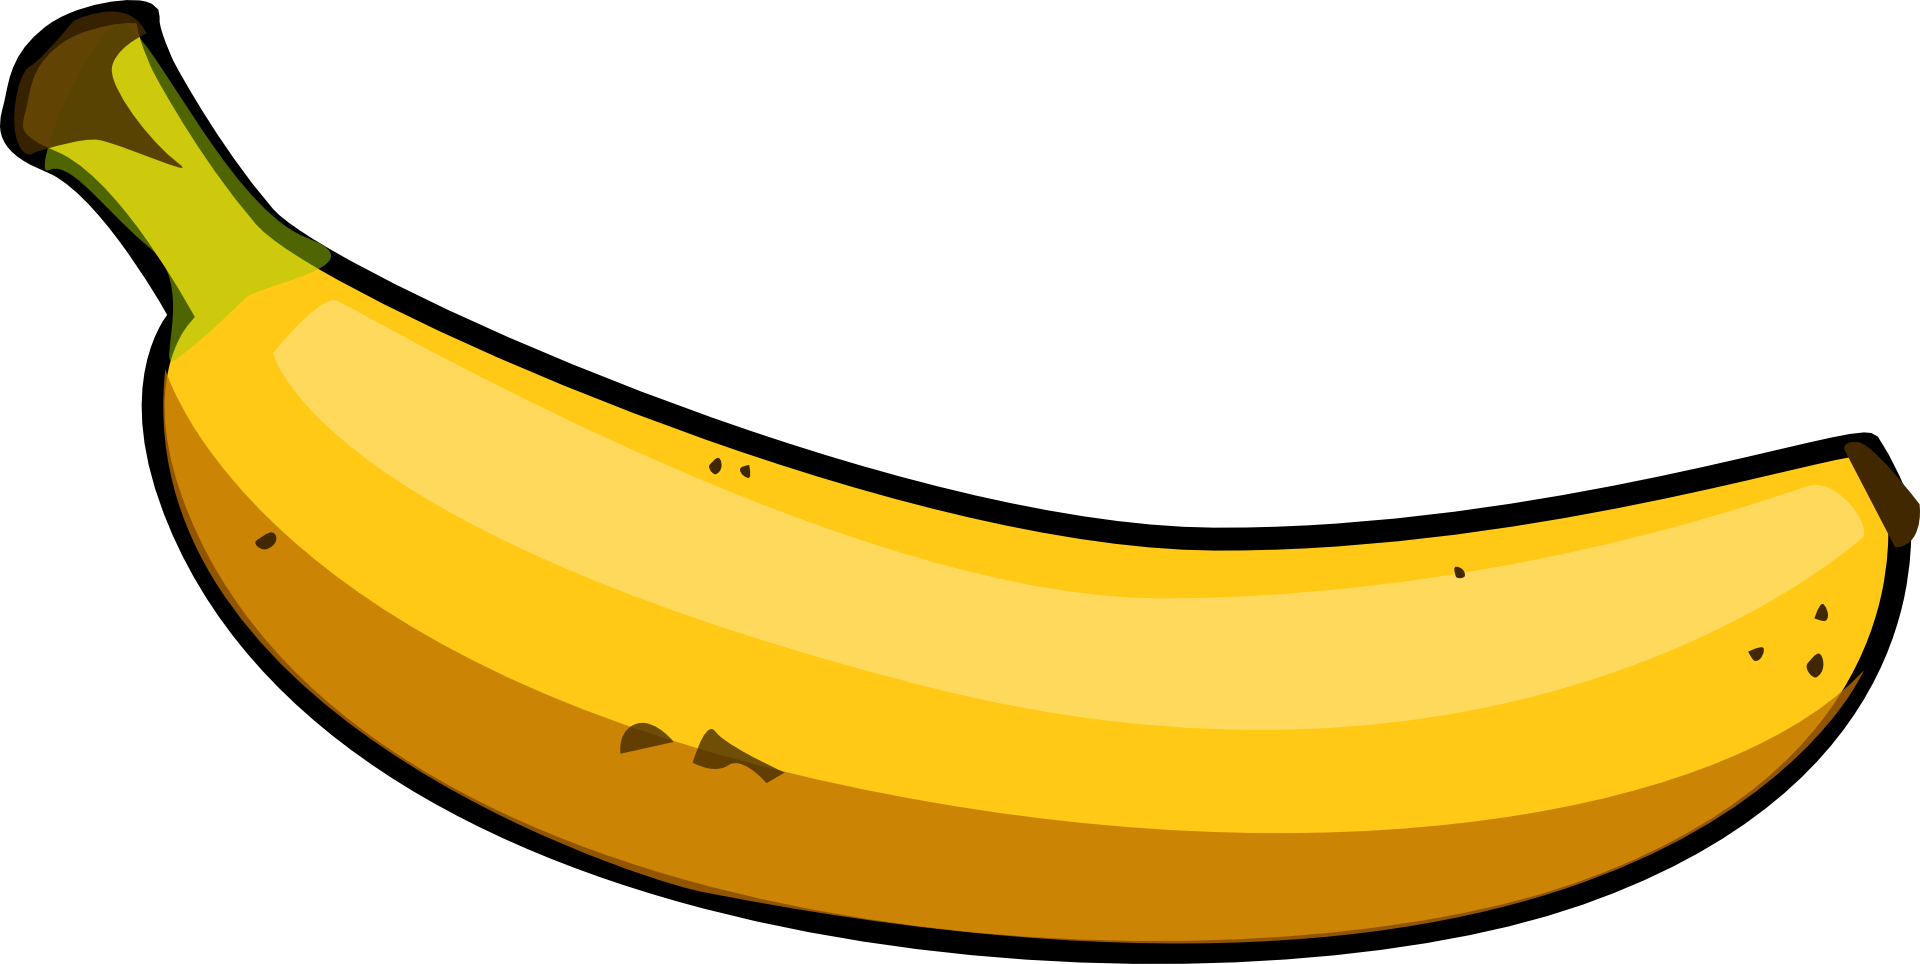 yellow banana clipart - photo #41